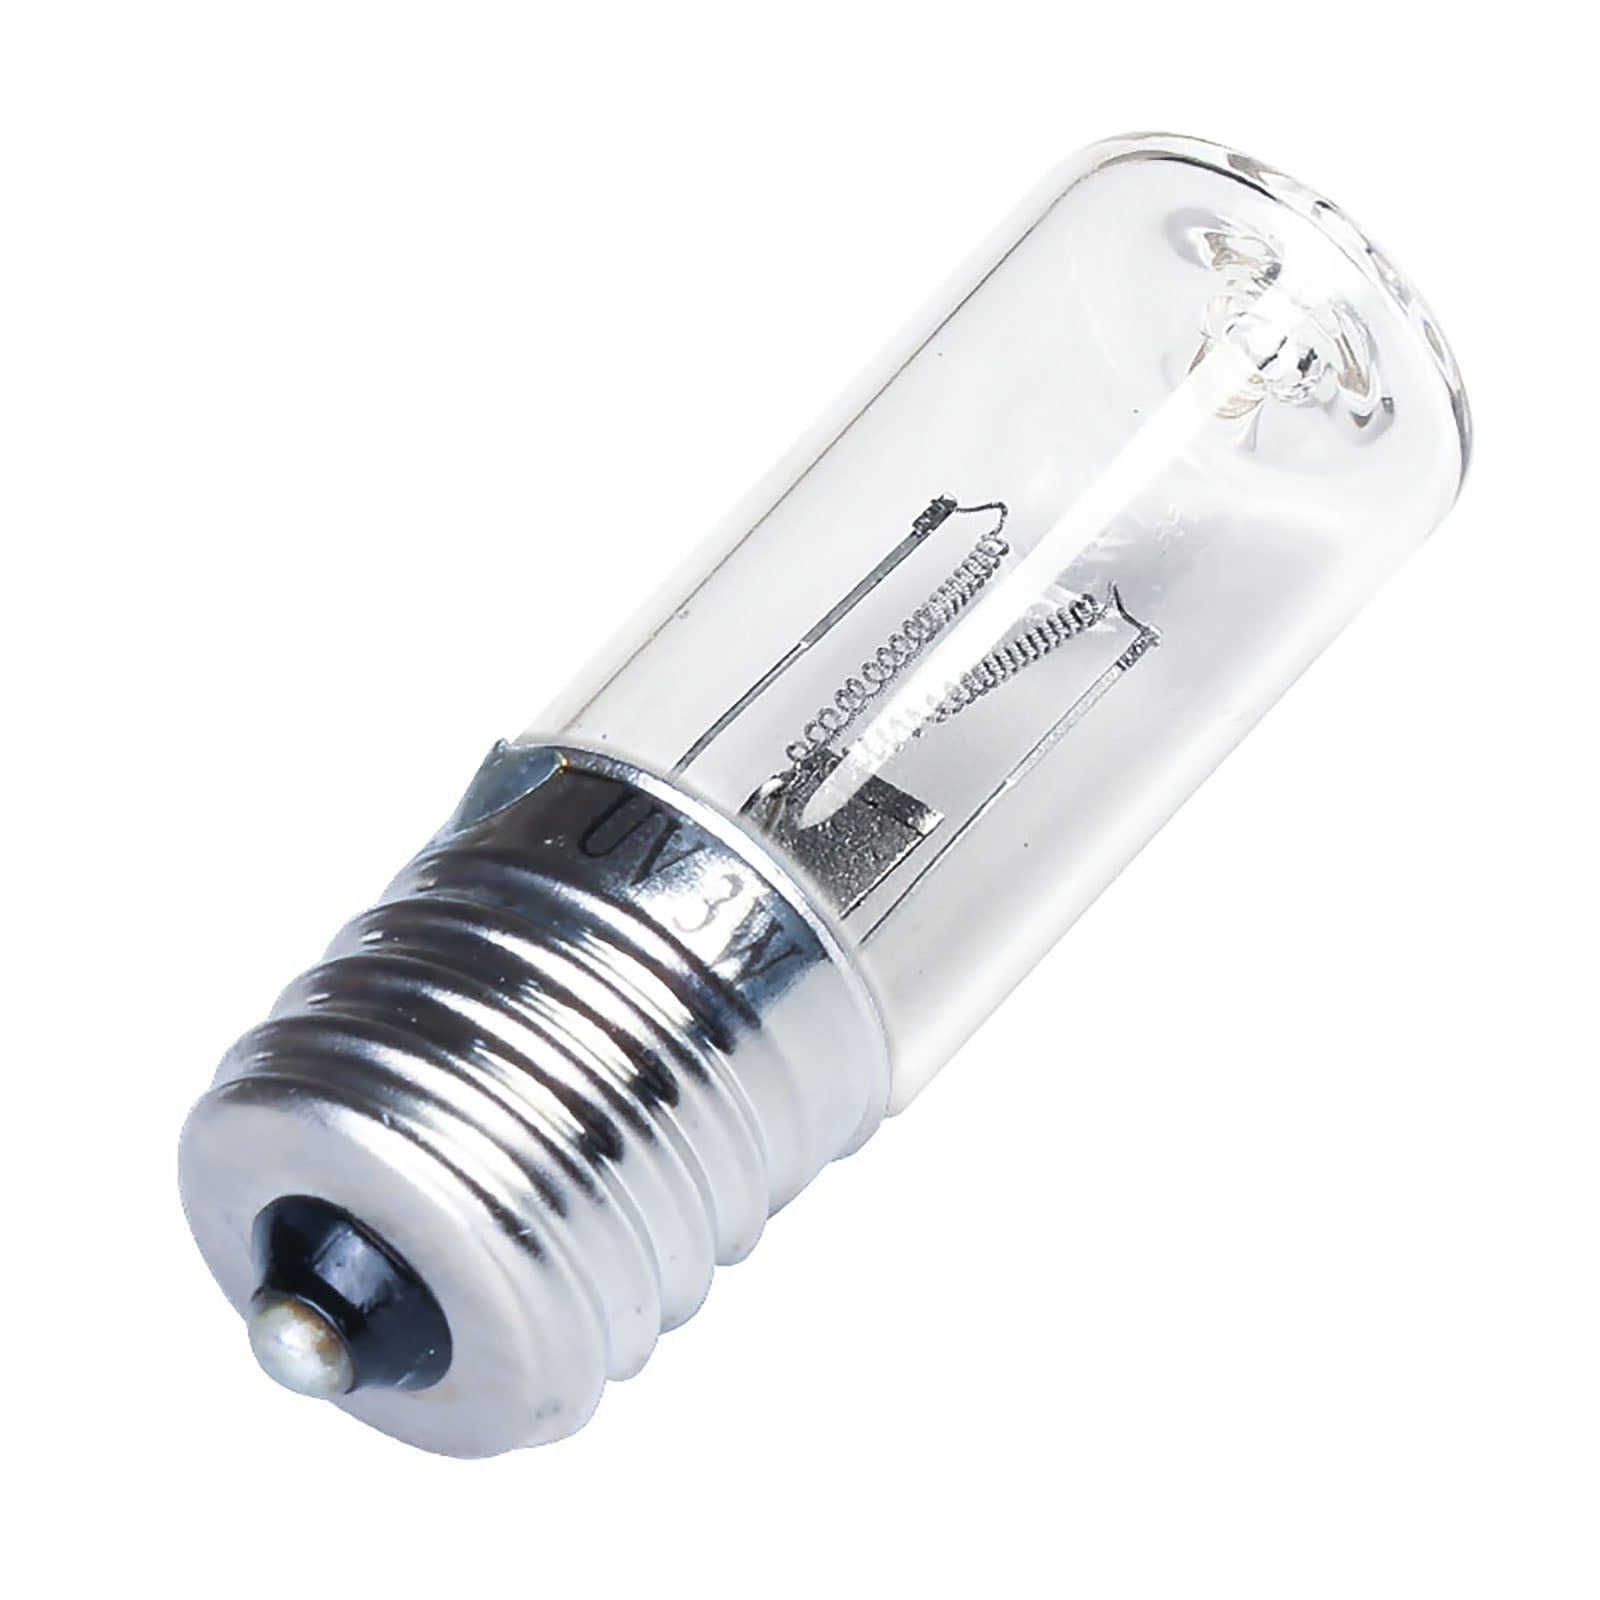 Details about   2PcsUV Germicidal Lamp Tube Ozone Ultraviolet Sterilizer Disinfection Light Bulb 